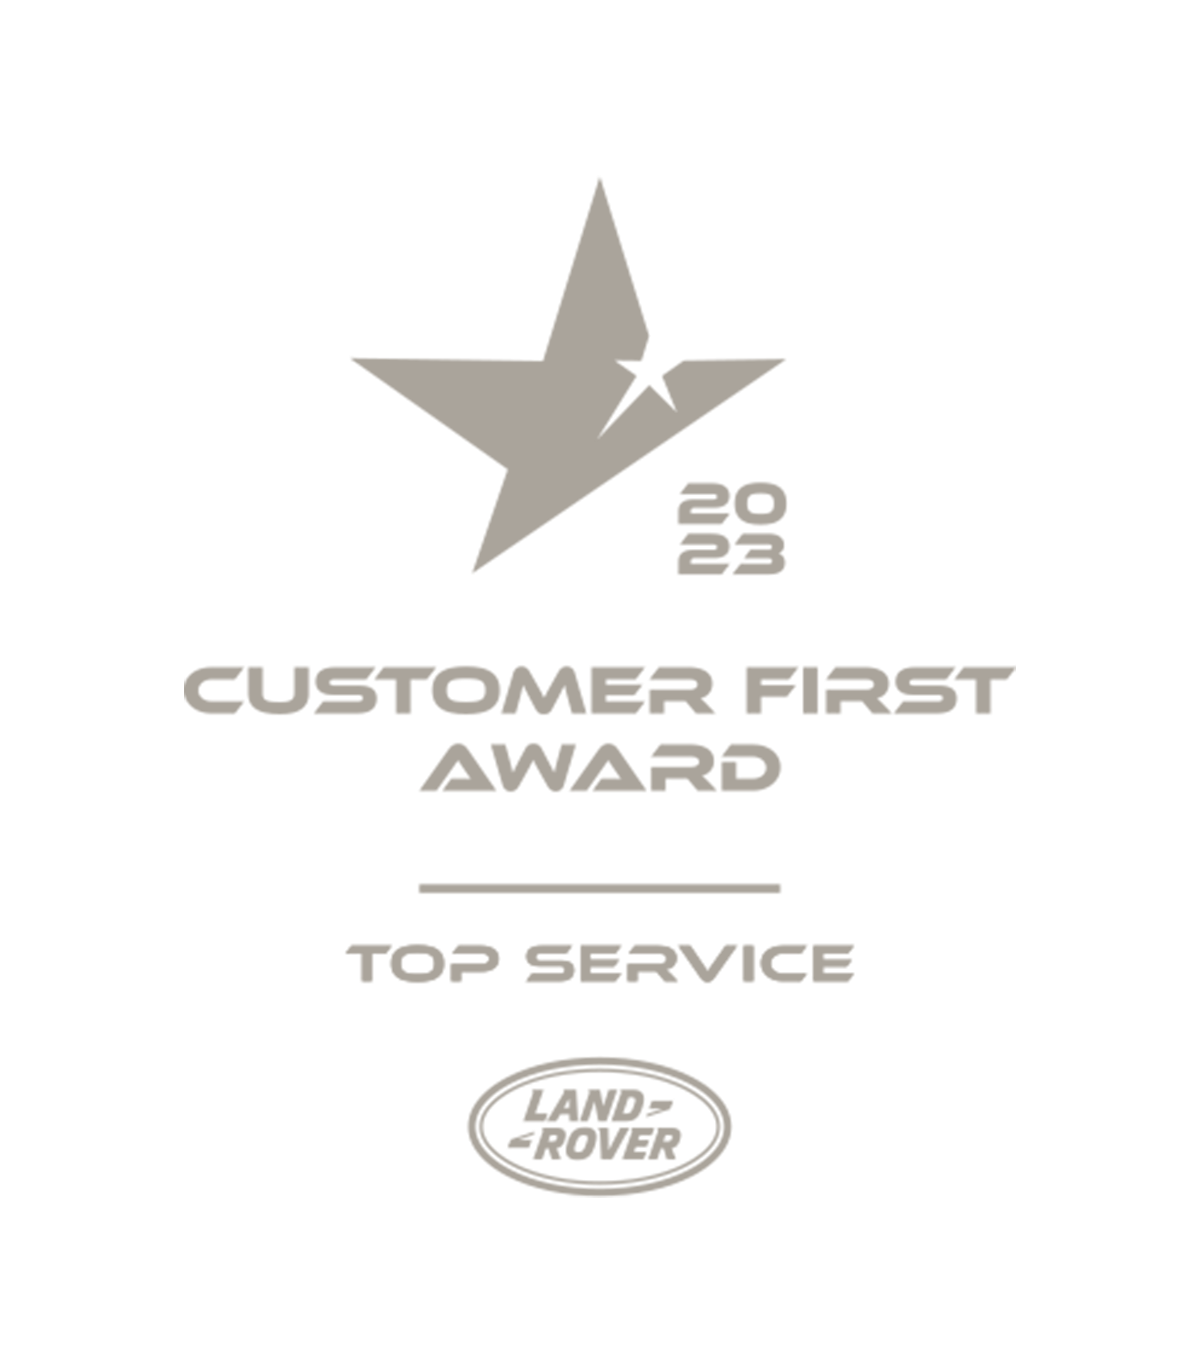 Customer First Award - Top Service - Land Rover